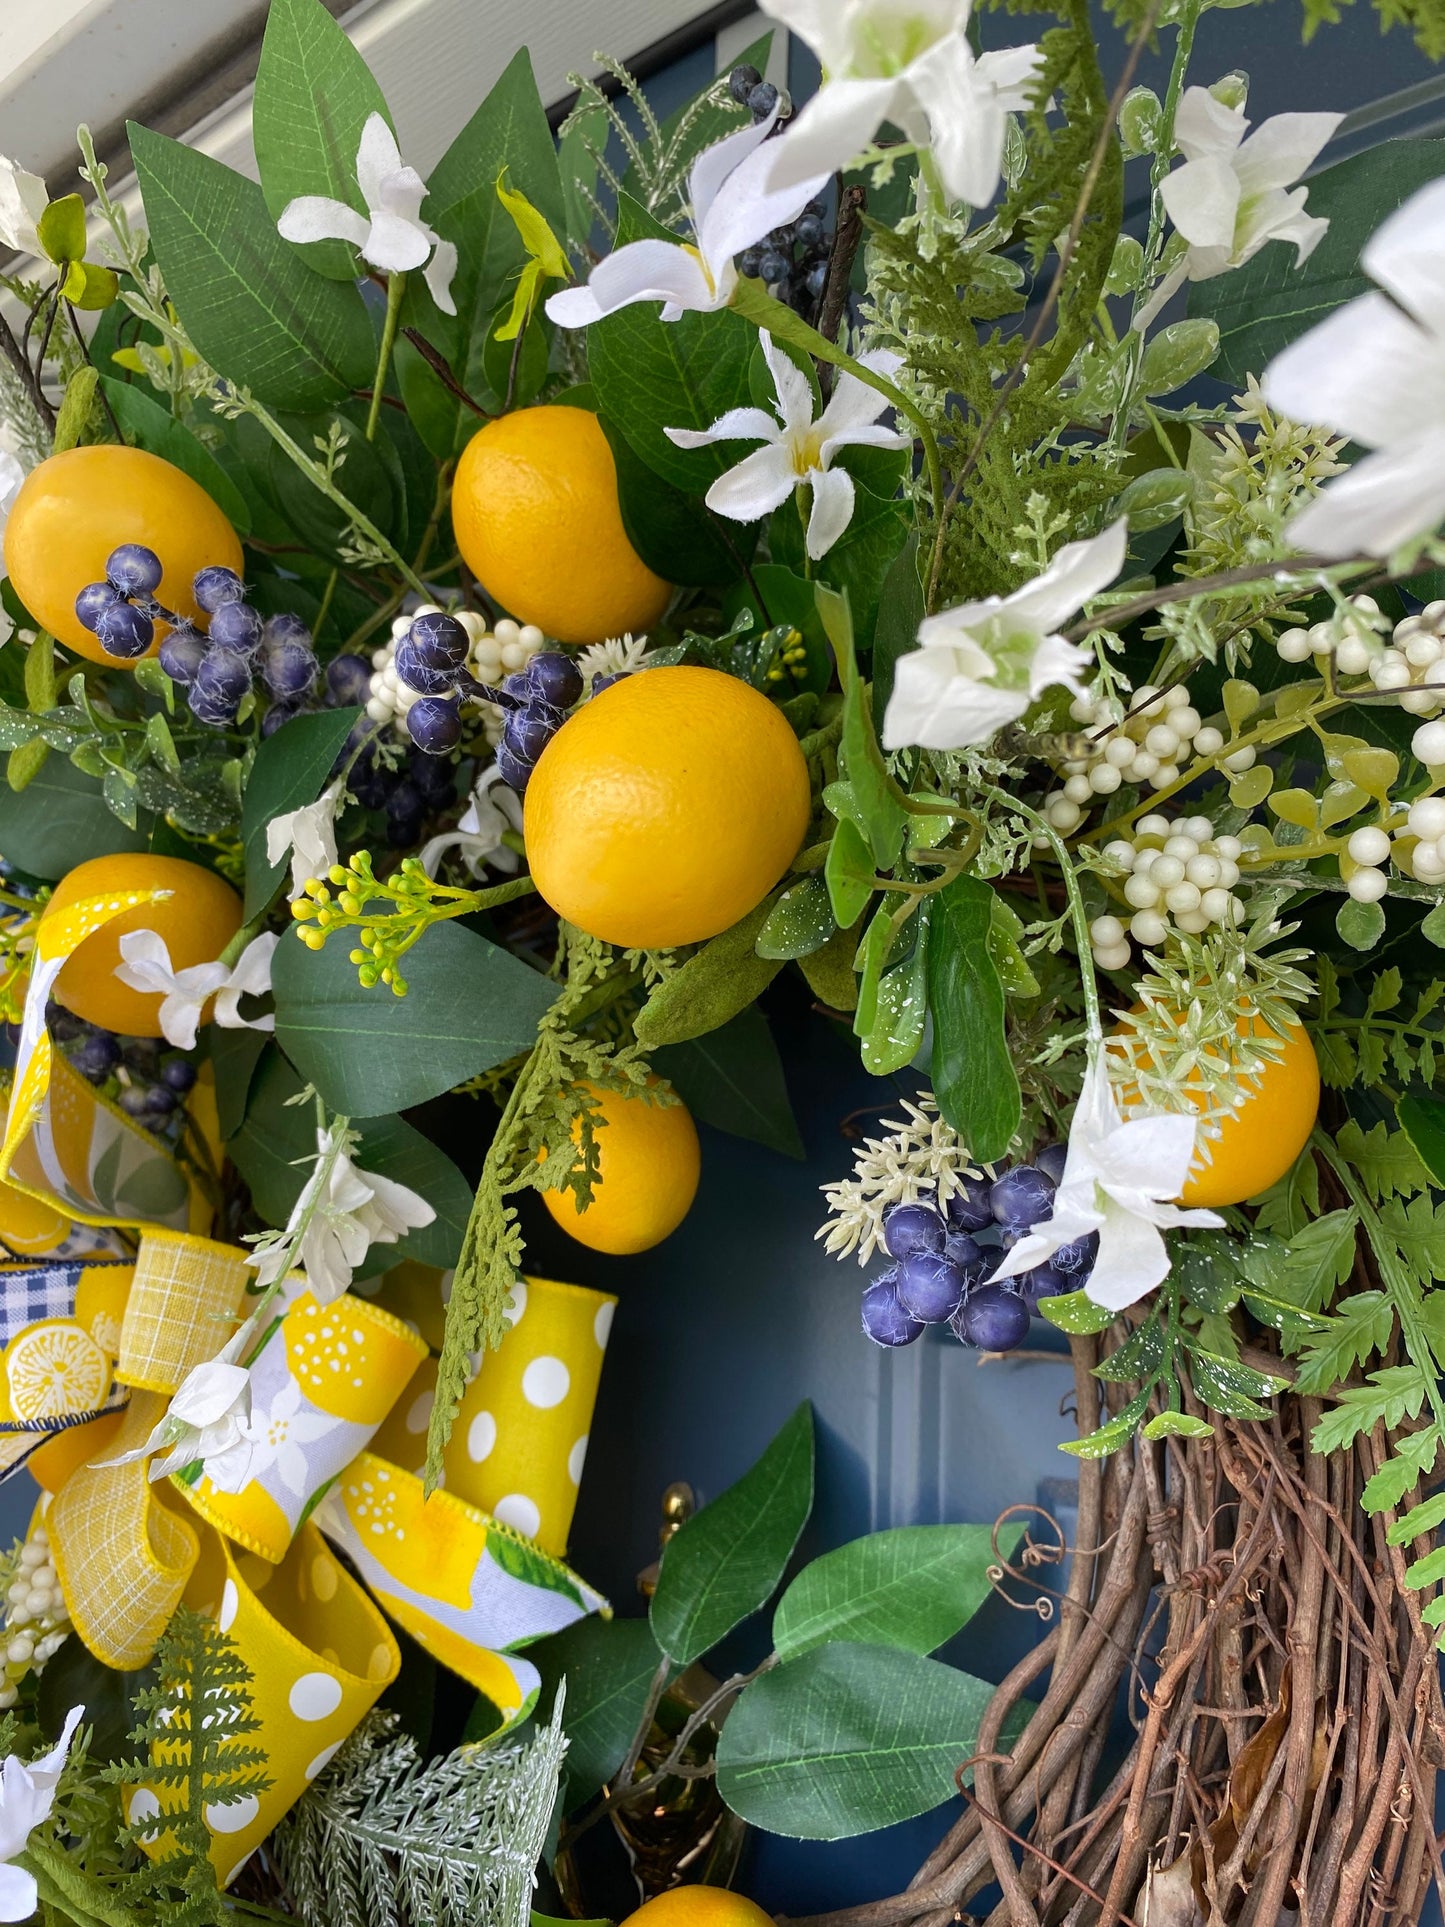 Summer Lemon and Blueberry Grapevine Wreath, Kitchen Lemon Décor, Farmhouse Fresh Citrus, Yellow and Blue Summer Fruit Door Hanger